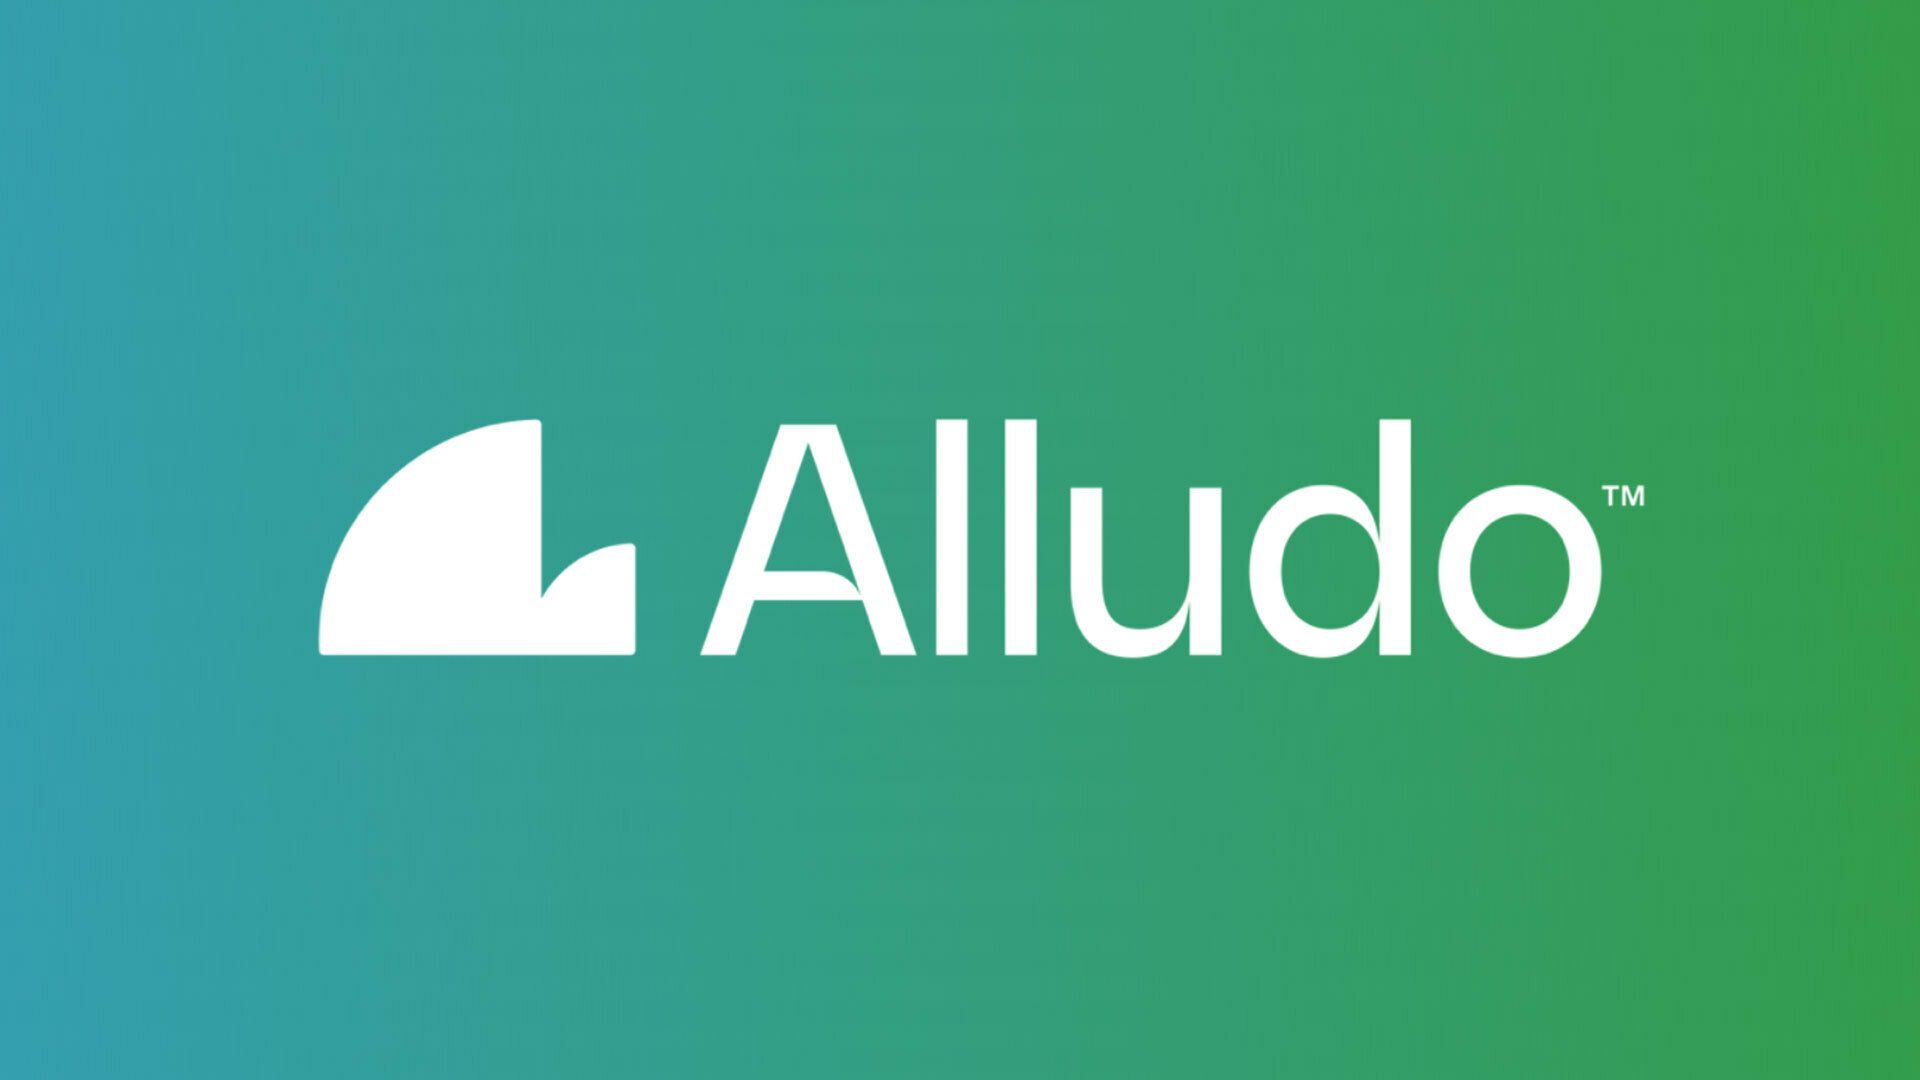 Corel сменила название на Alludo